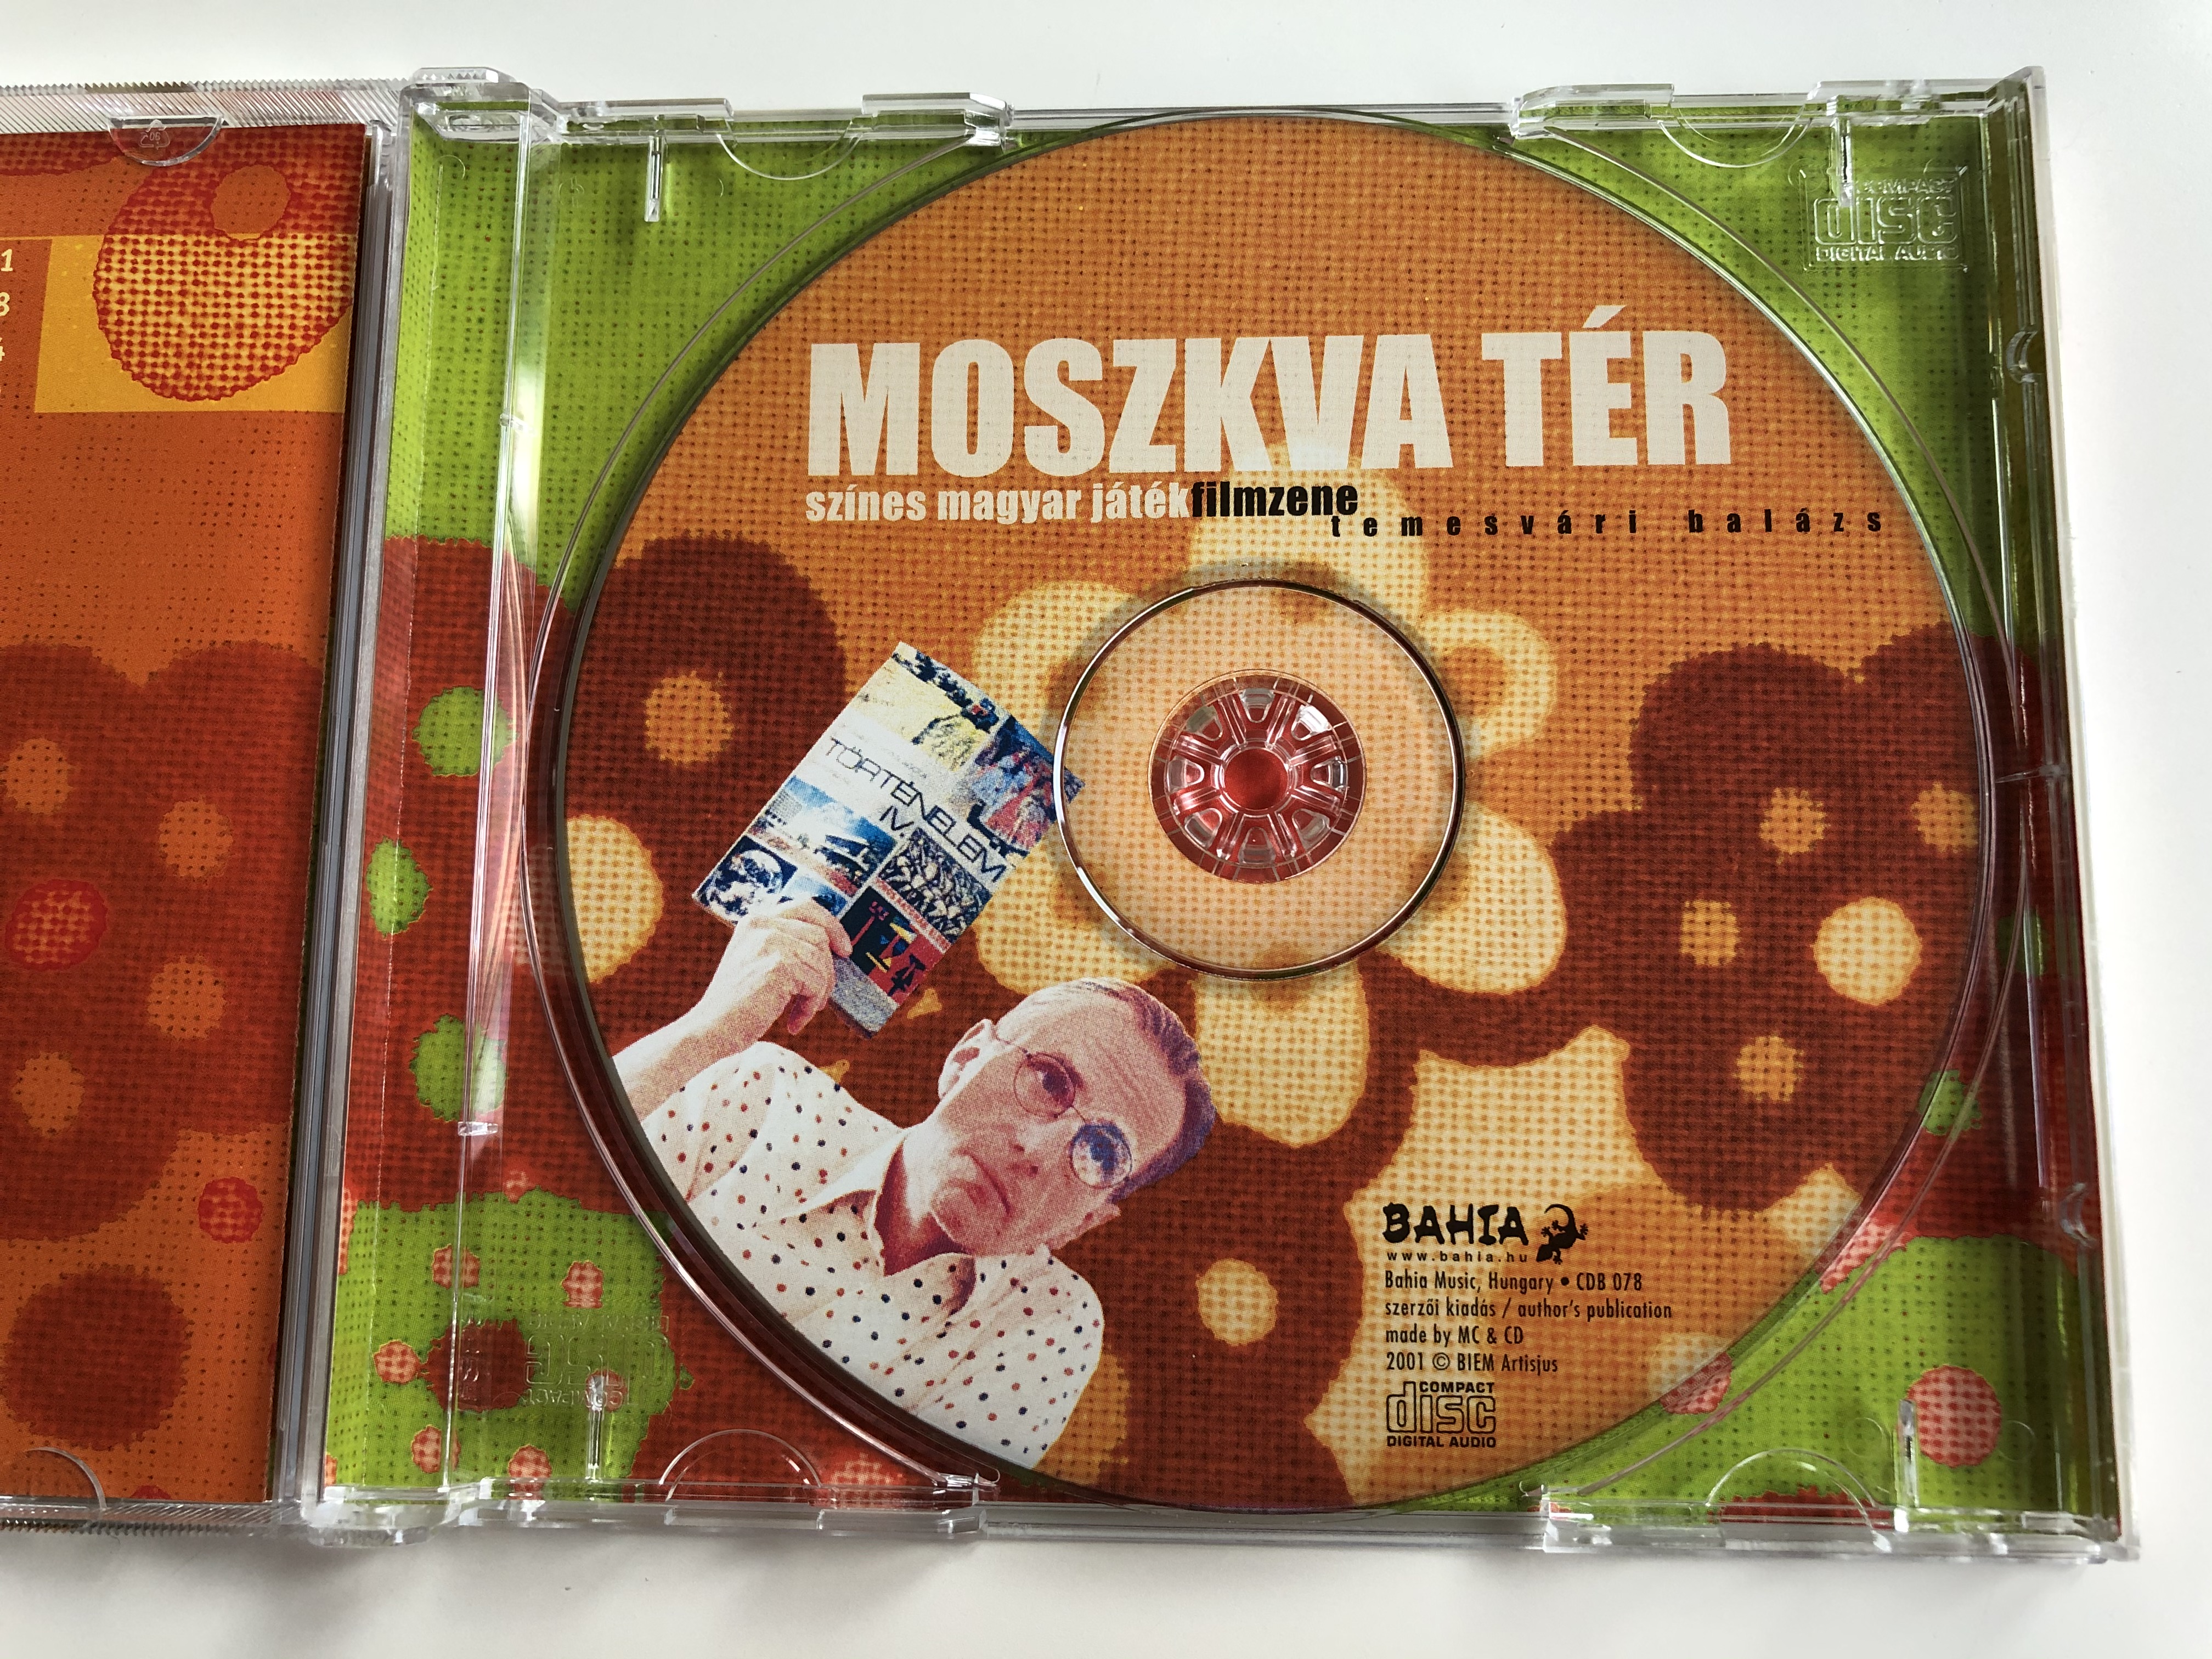 moszkva-ter-szines-magyar-jatek-filmzene-temesv-ri-bal-zs-bahia-music-audio-cd-2001-cdb-078-6-.jpg